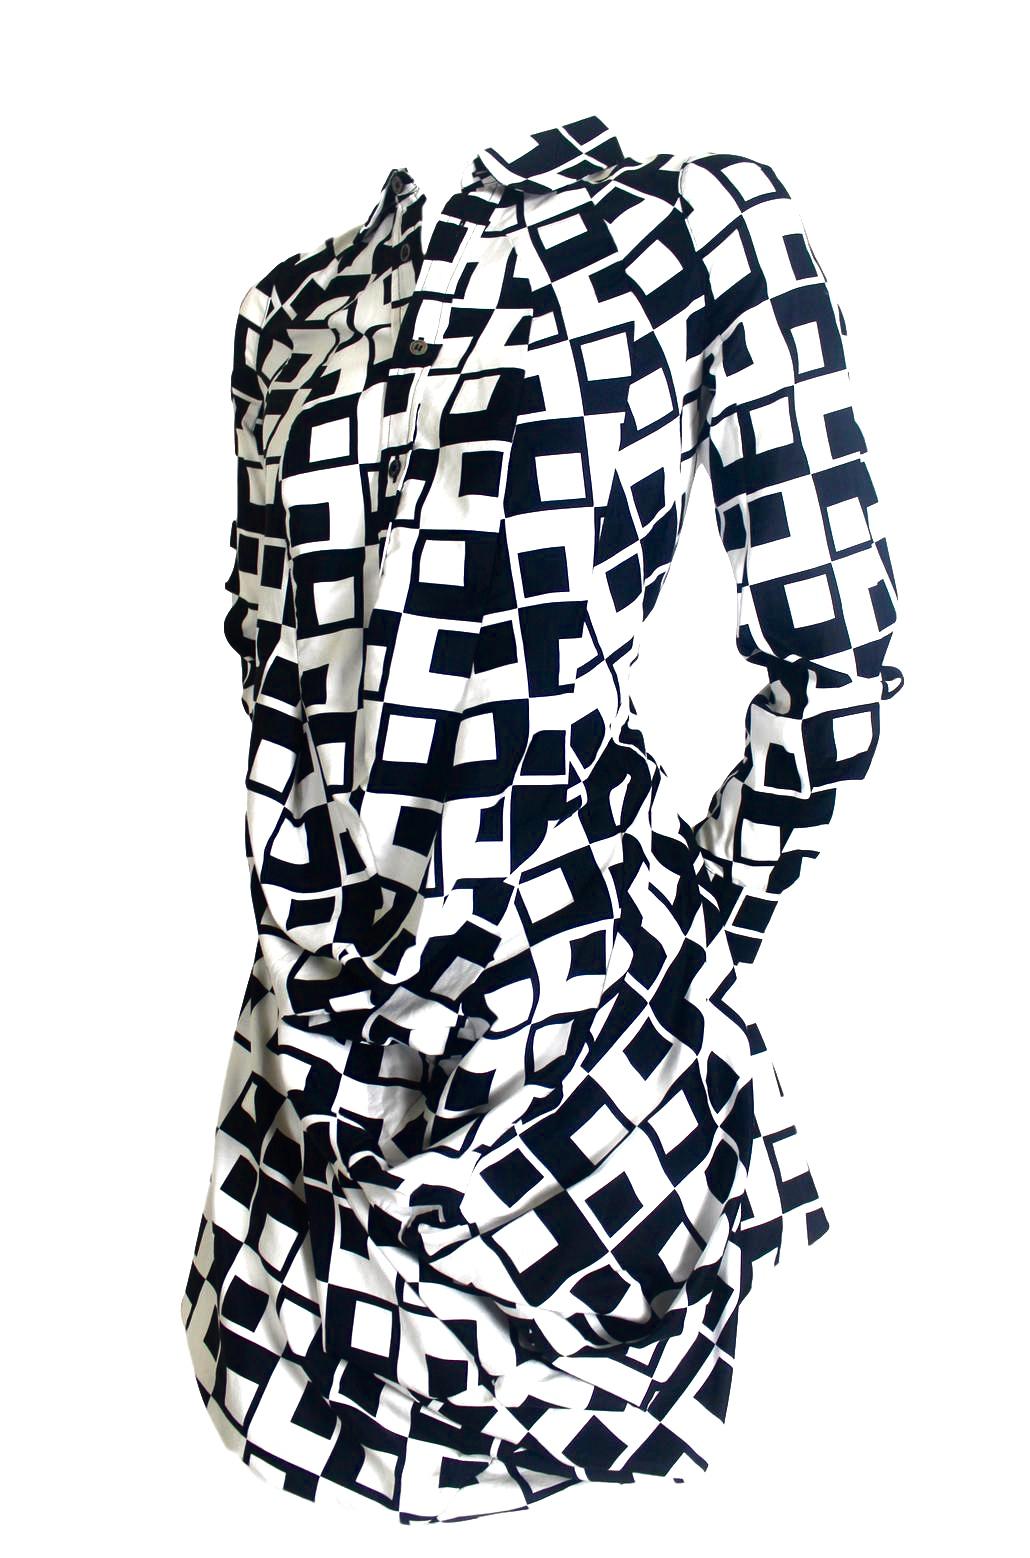 Junya Watanabe Comme des Garcons
AD 2009 Geometric Print Dress
Size XS
